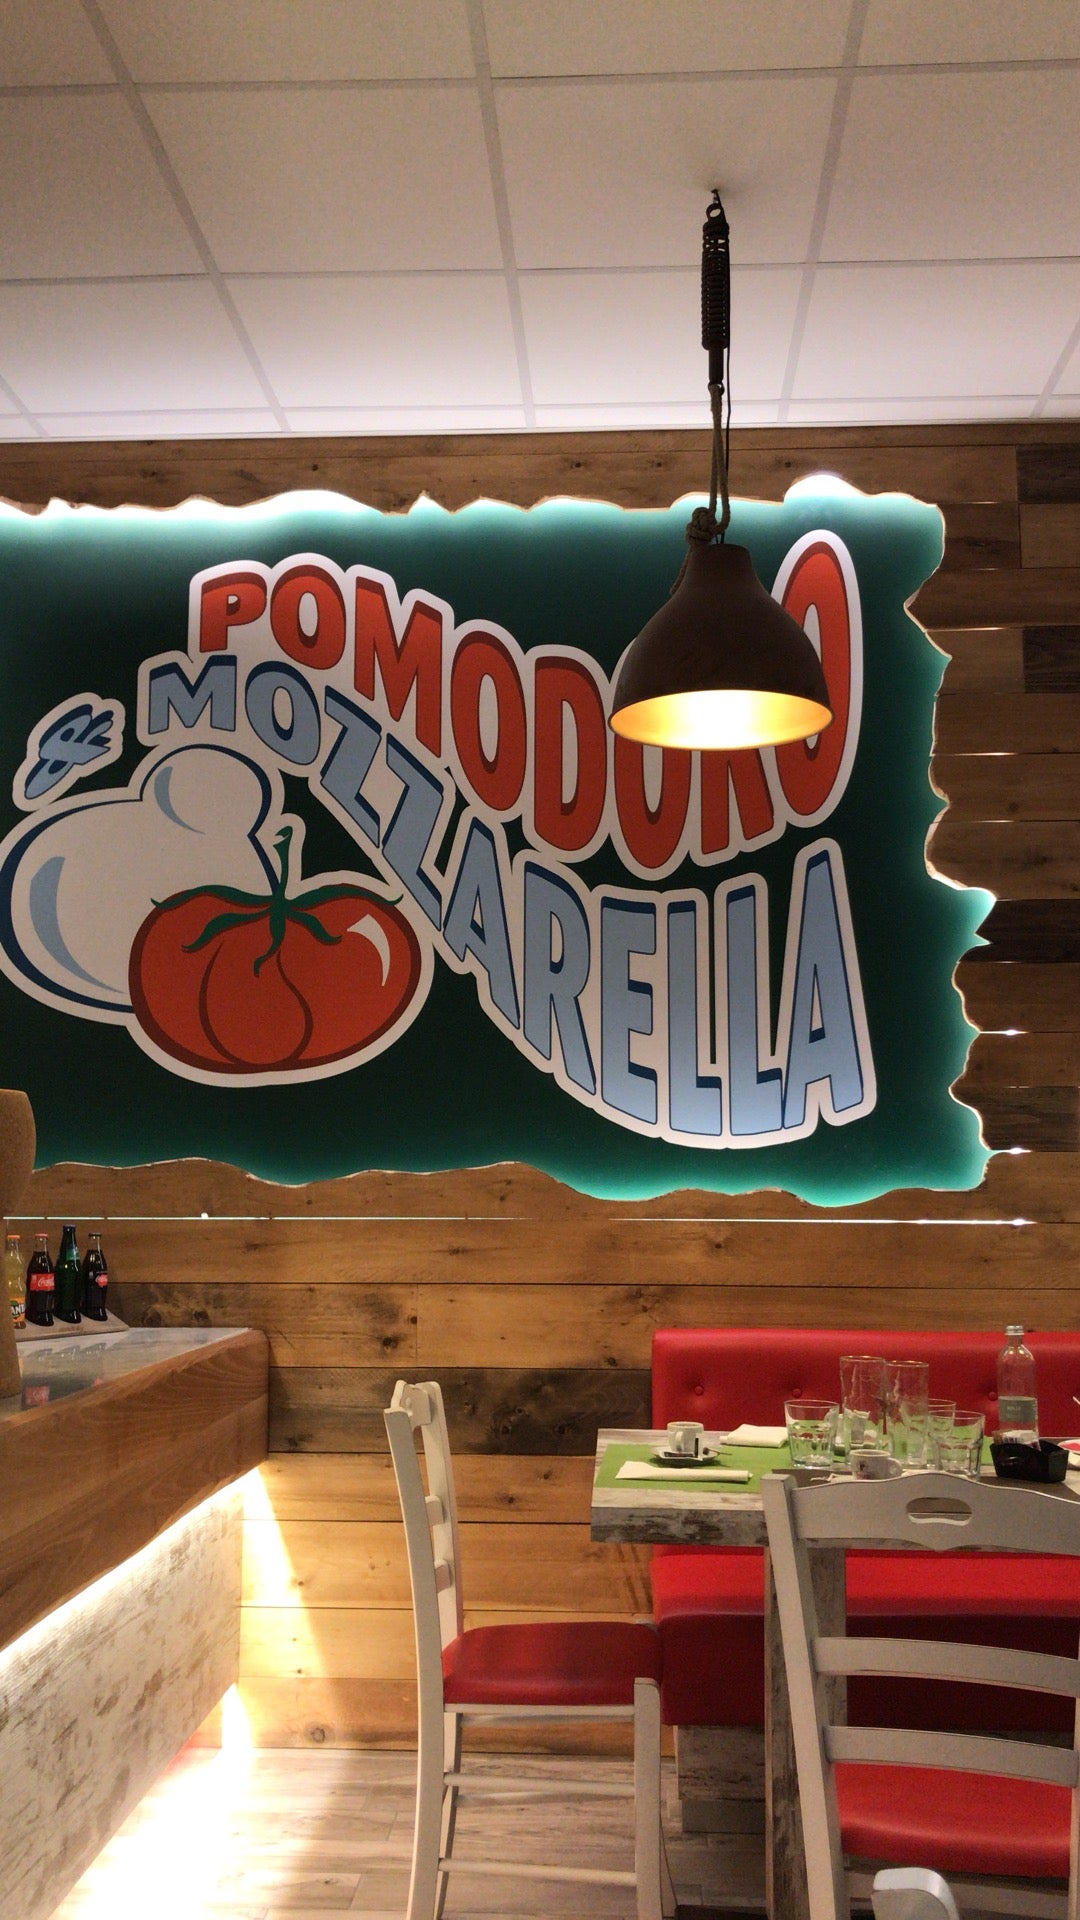 Pomodoro & Mozzarella